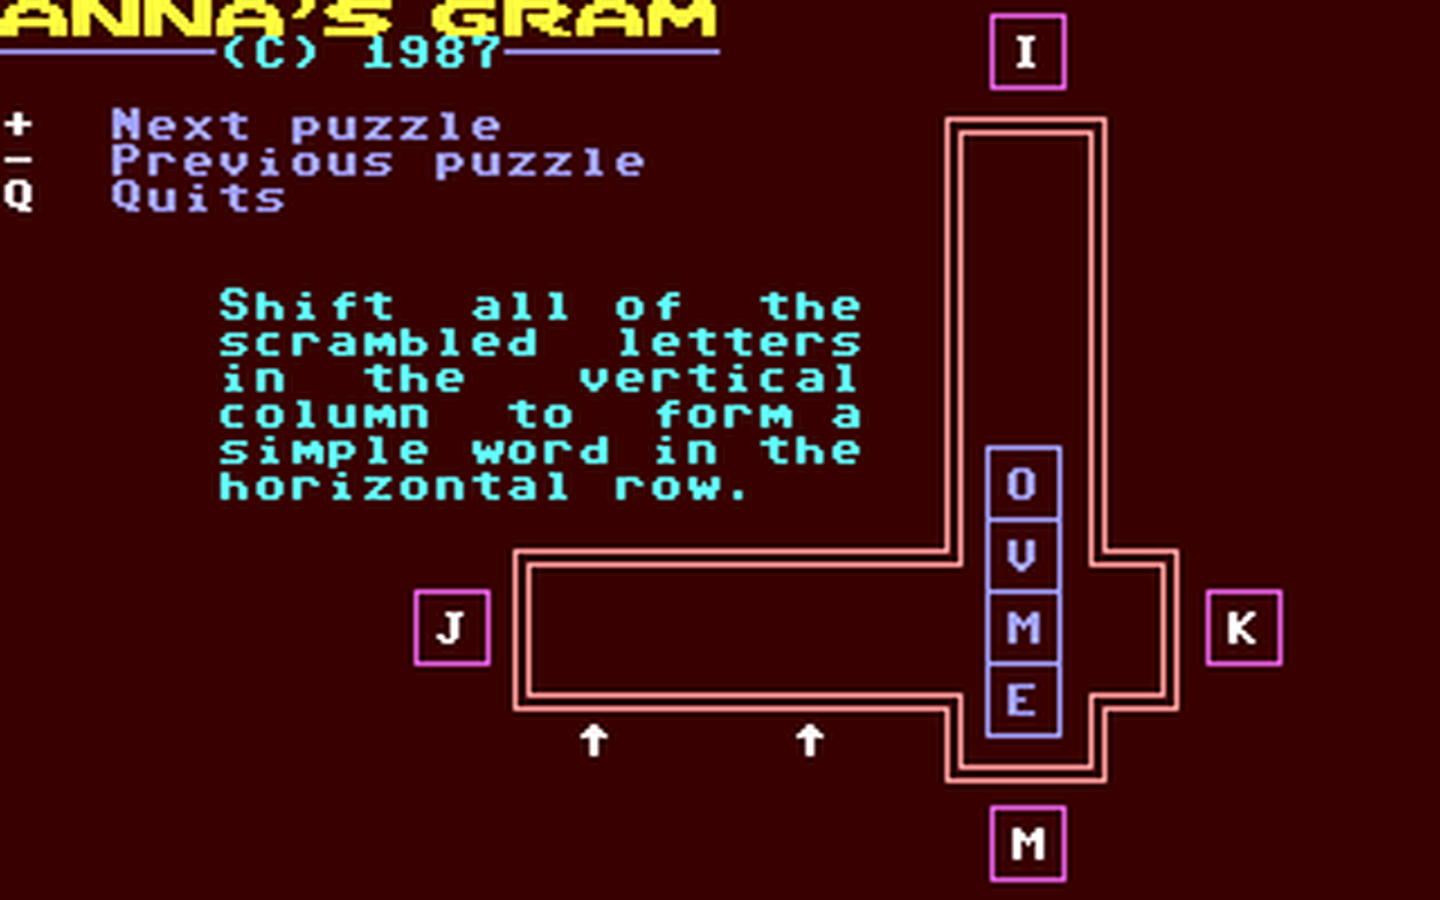 C64 GameBase Anna's_Gram Loadstar/Softdisk_Publishing,_Inc. 1987